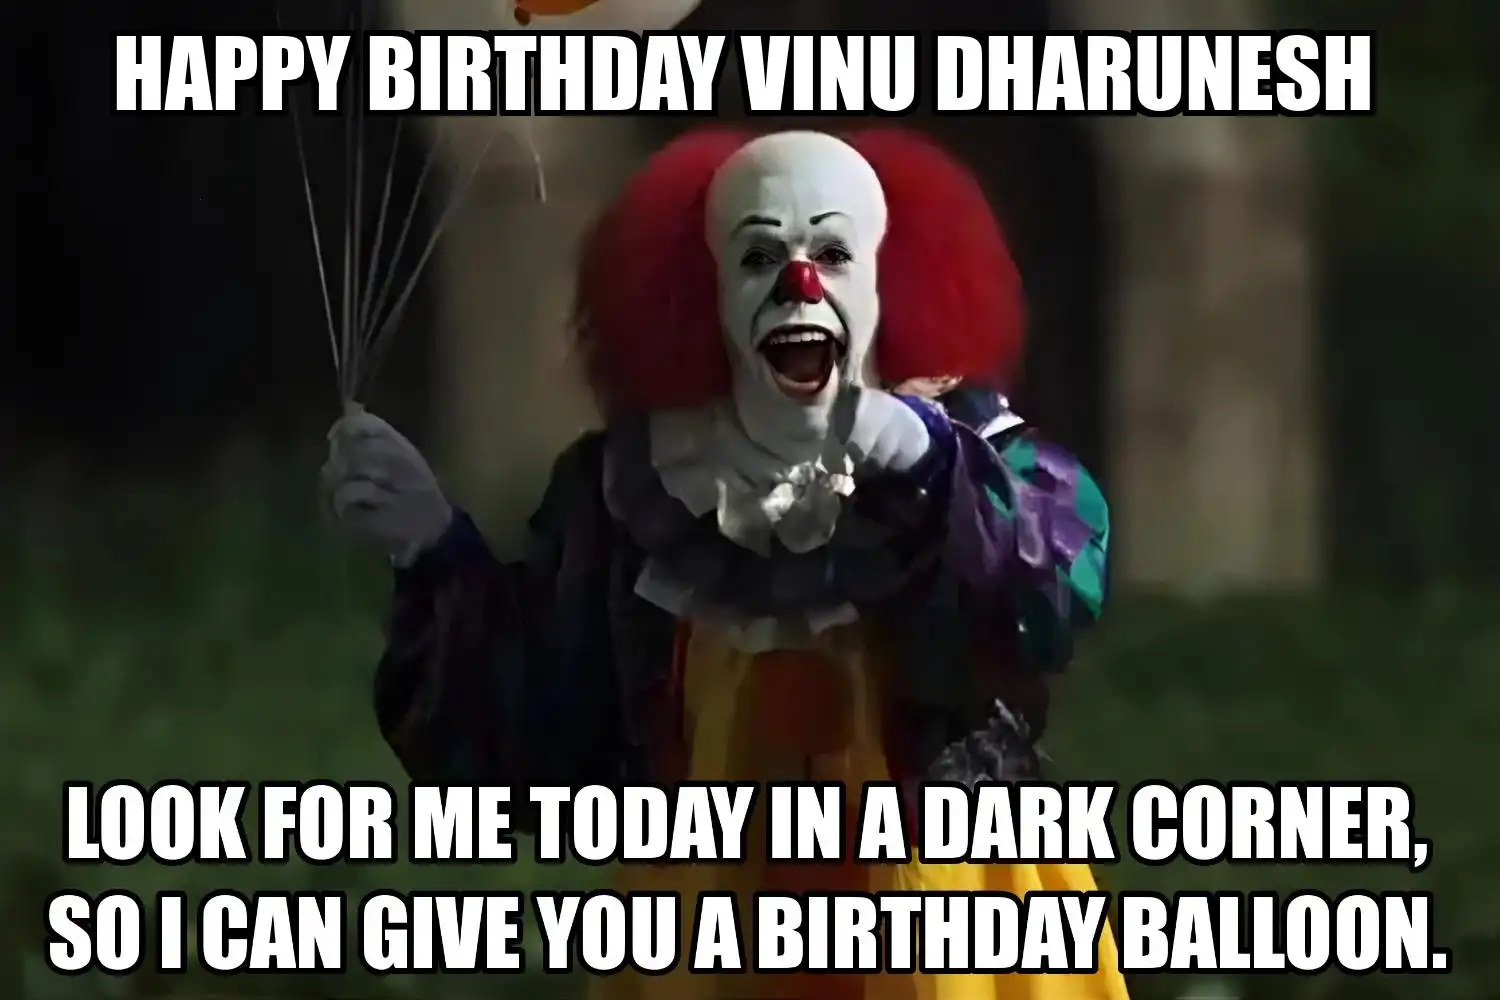 Happy Birthday Vinu dharunesh I Can Give You A Balloon Meme